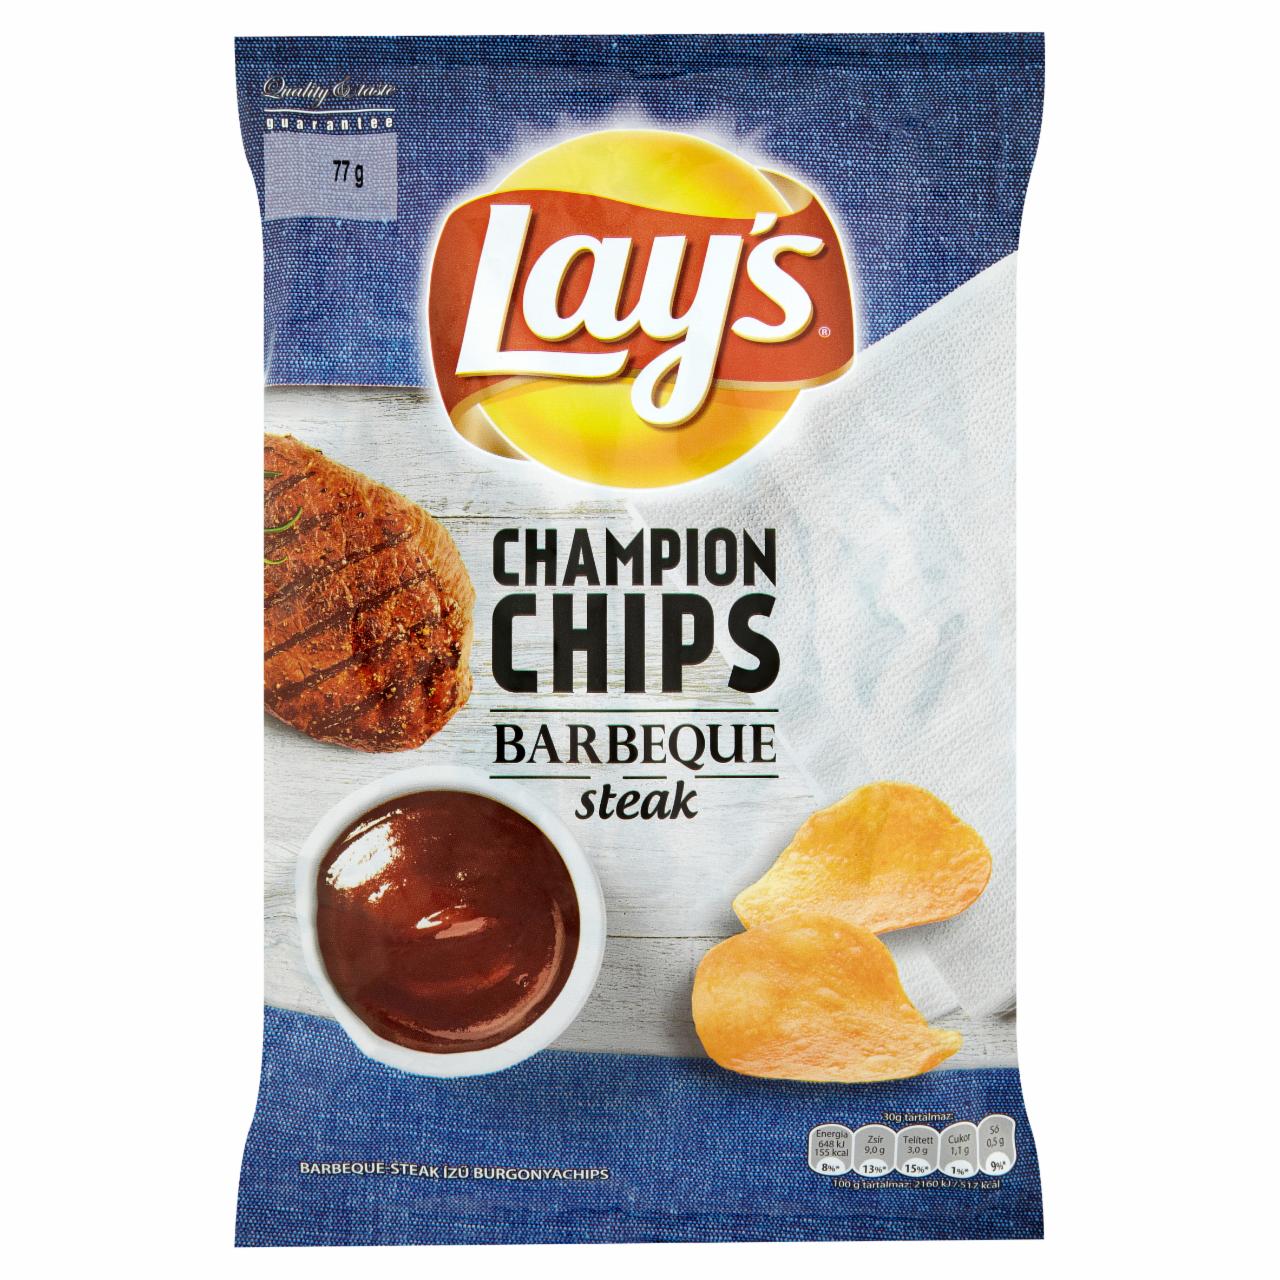 Képek - Lay's Champion Chips barbeque-steak ízű burgonyachips 77 g